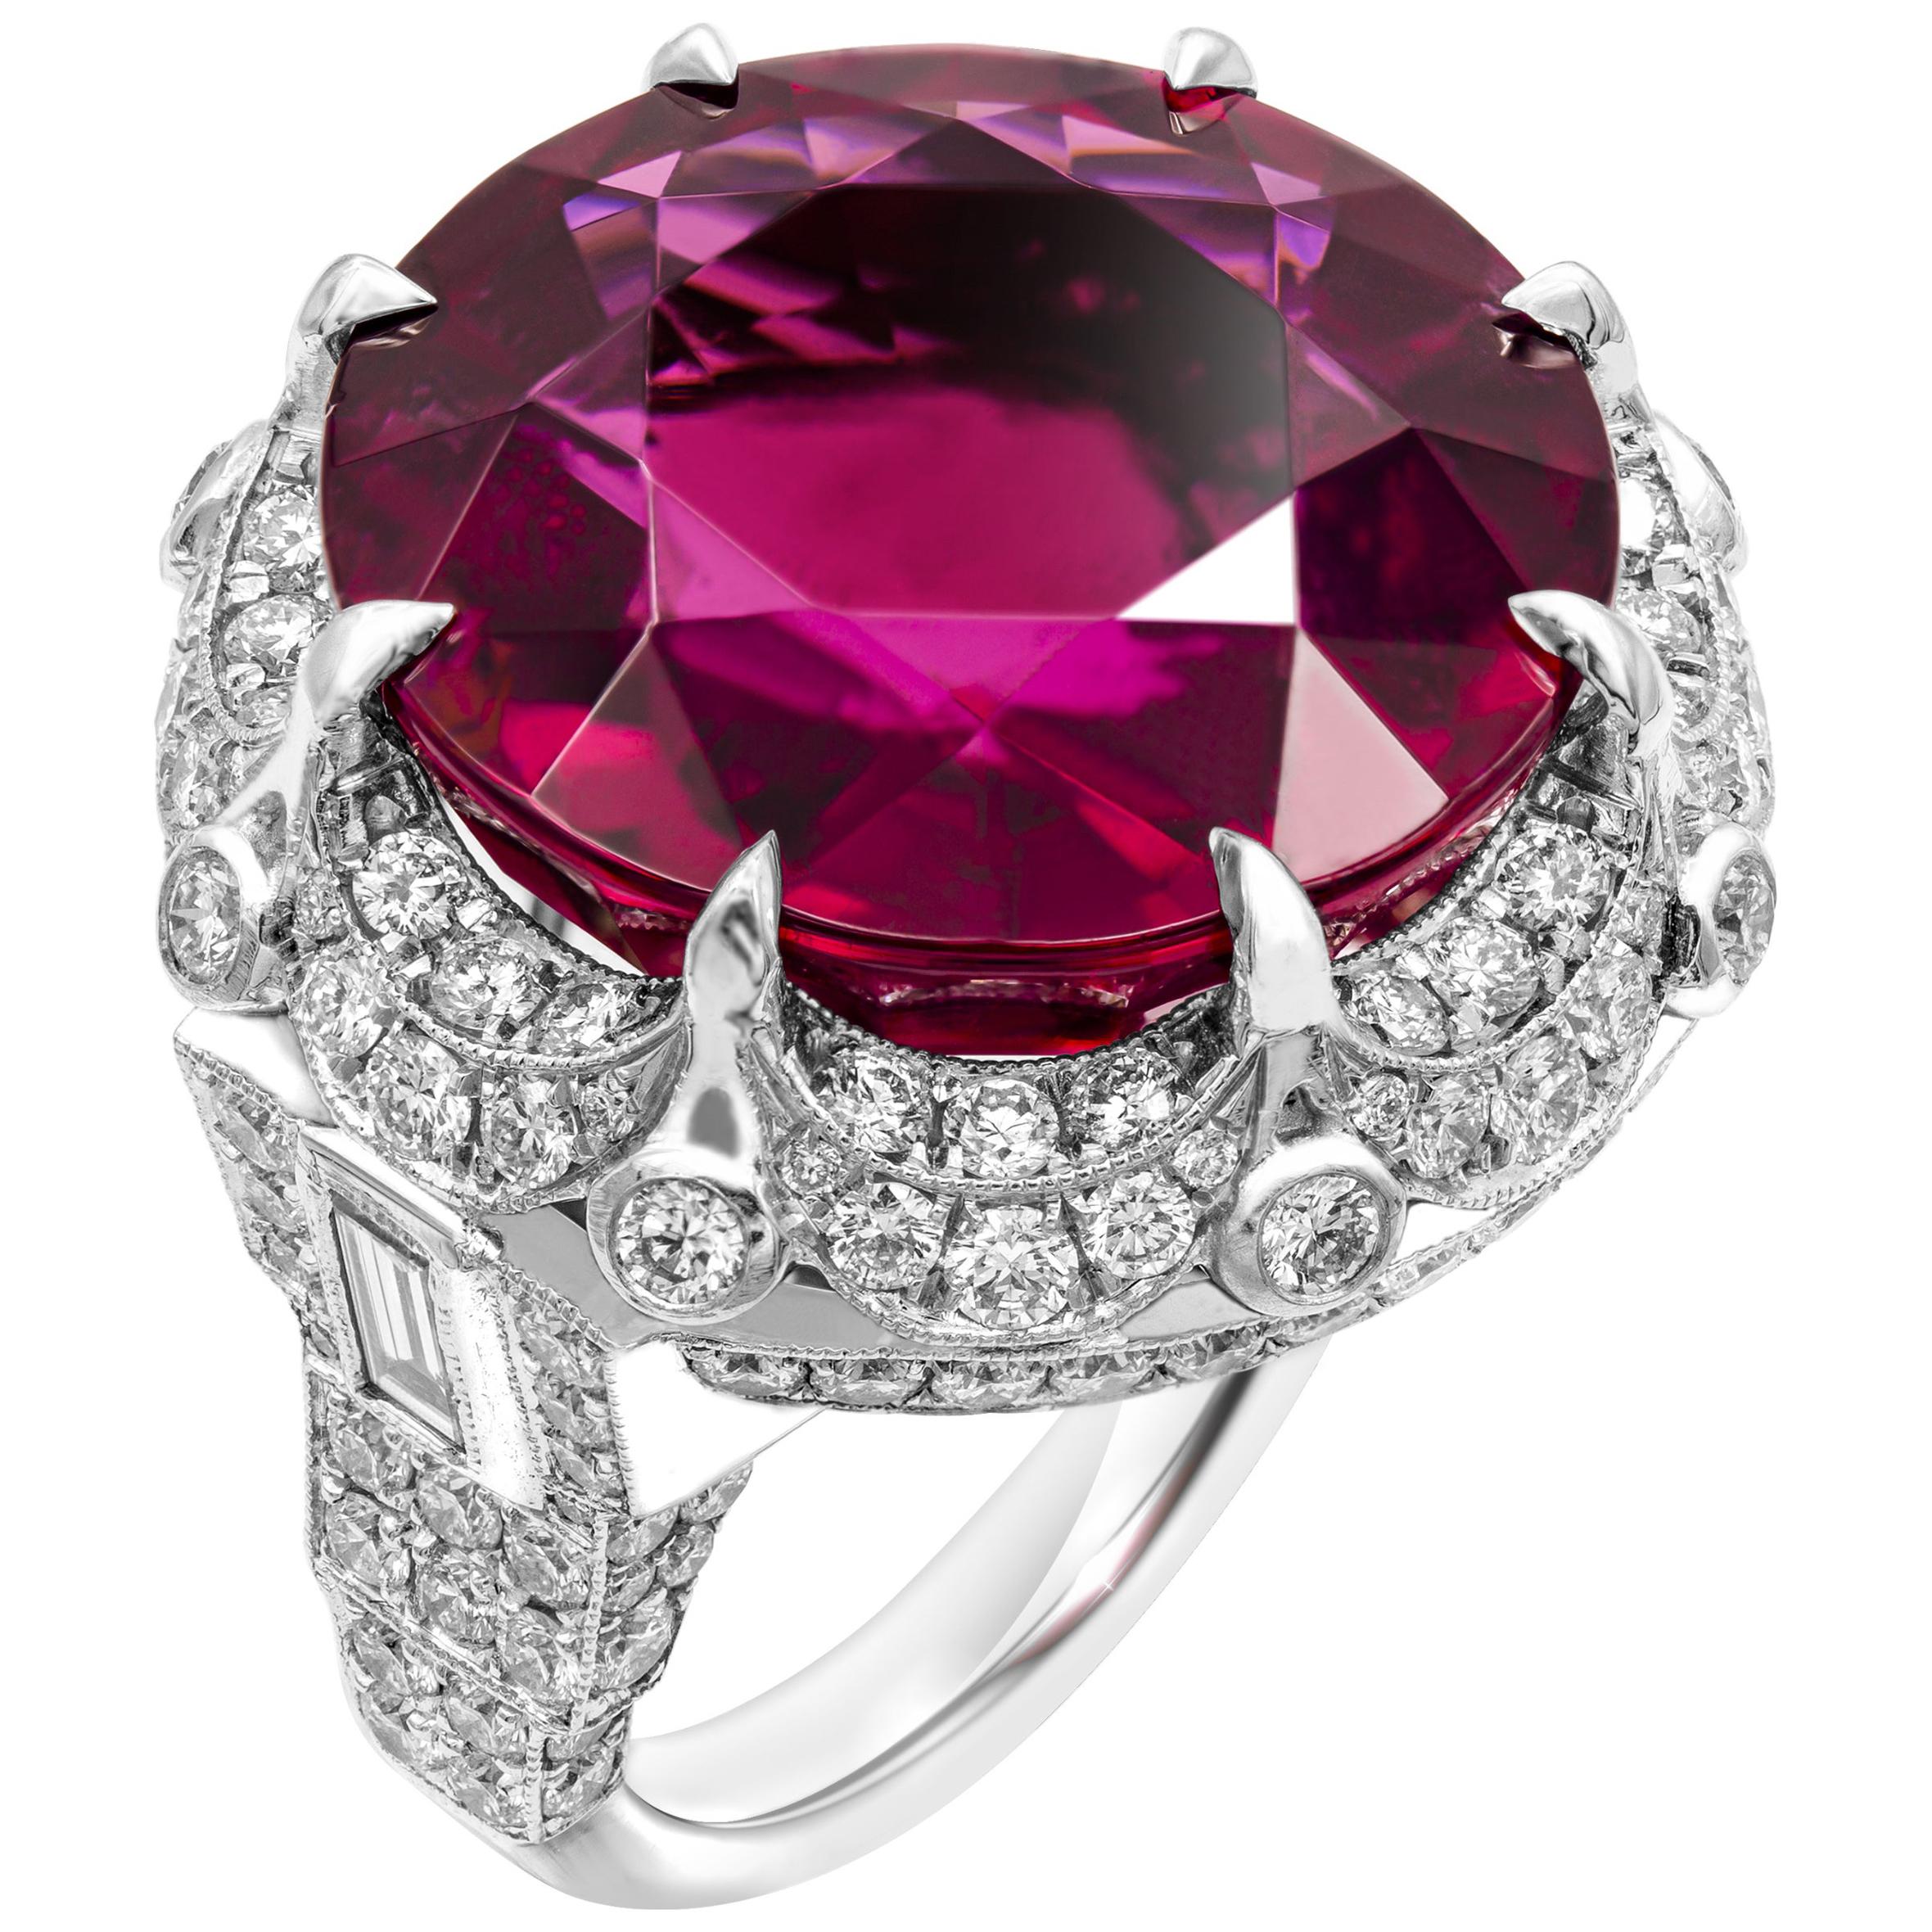 GIA Certified 27.25 Carat Round Red Rubellite Tourmaline Diamond Ring